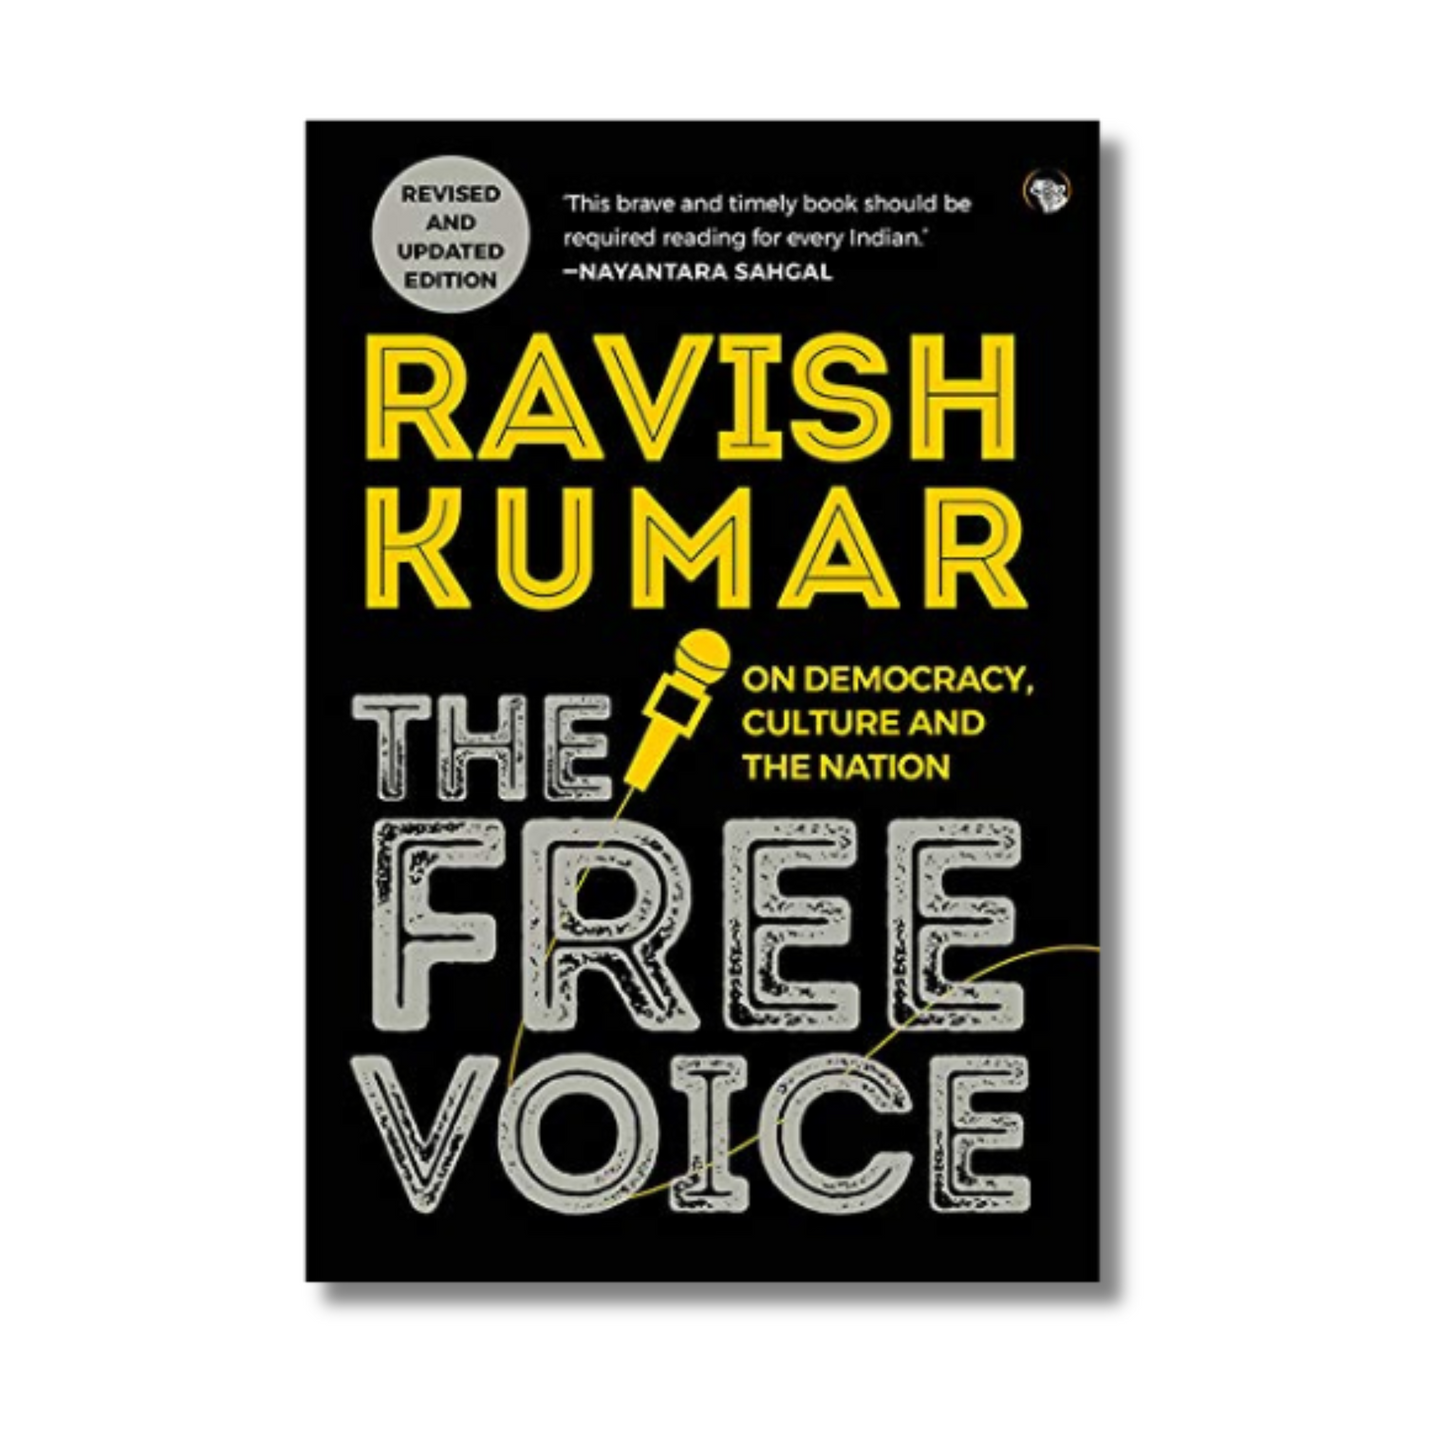 The Free Voice By Ravish Kumar (Paperback)